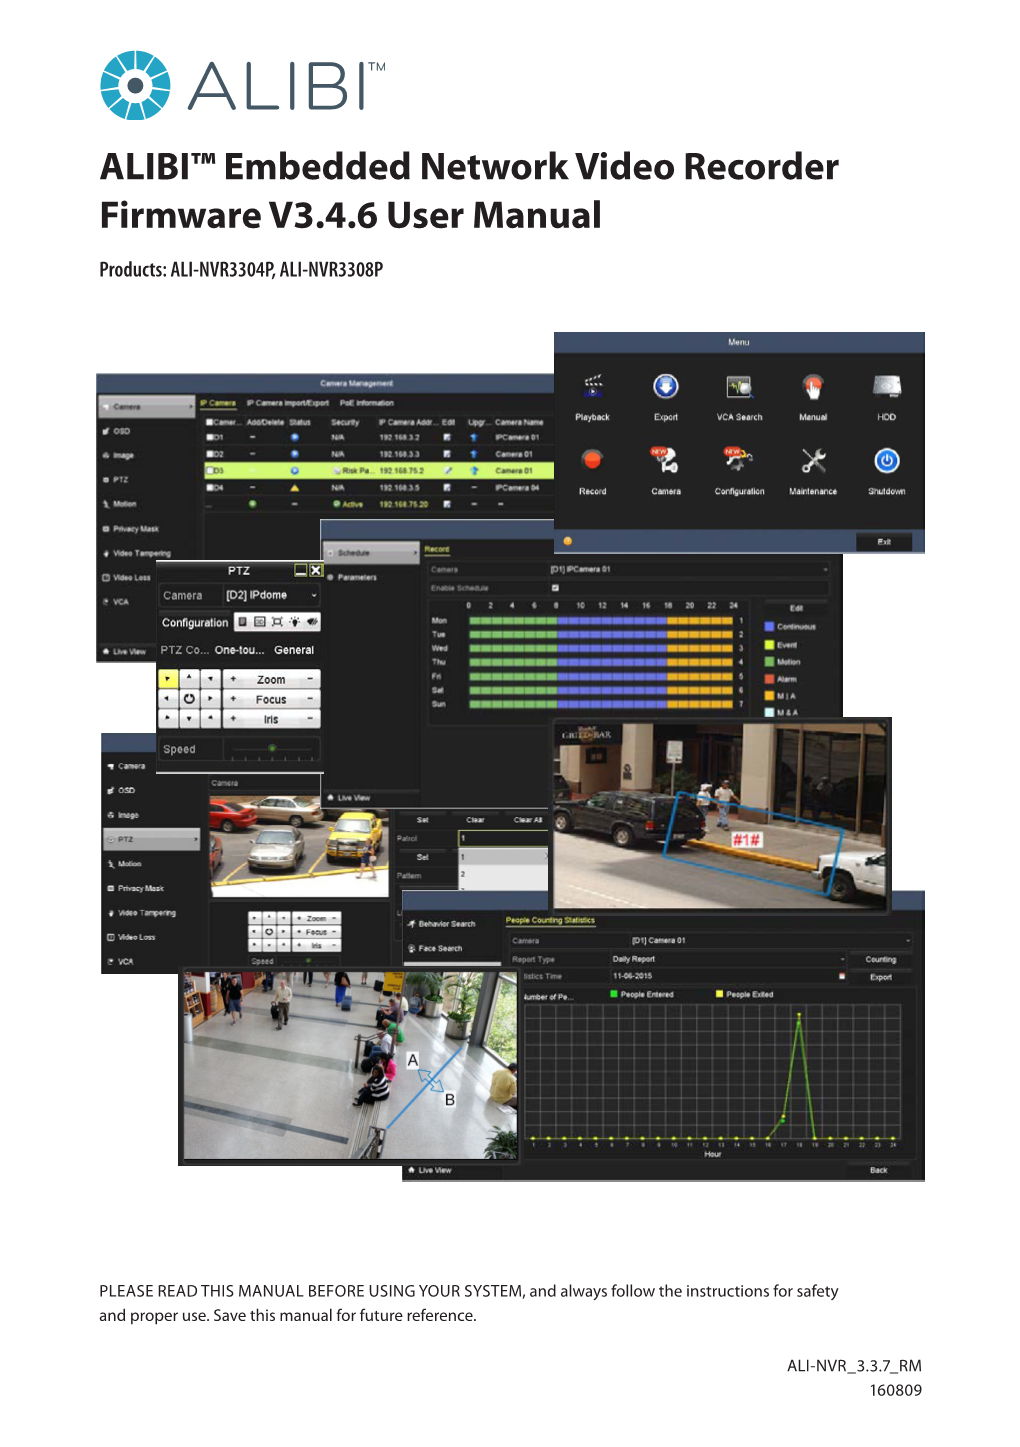 ALIBI™ Embedded Network Video Recorder Firmware V3.4.6 User Manual